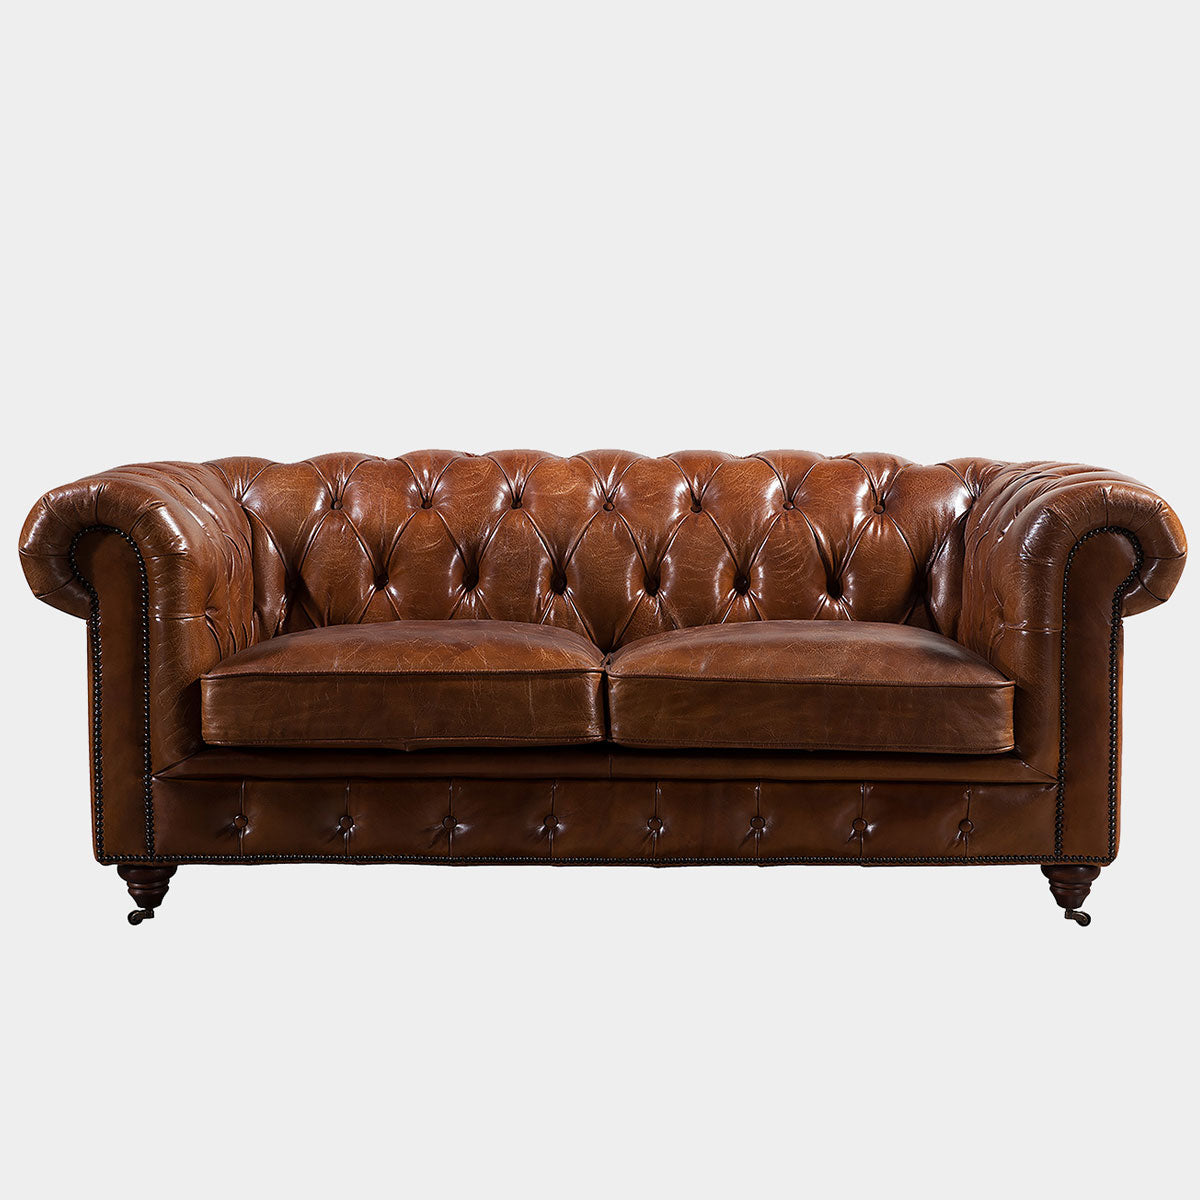 Chesterfield 2 Seater Sofa - Full grain leather